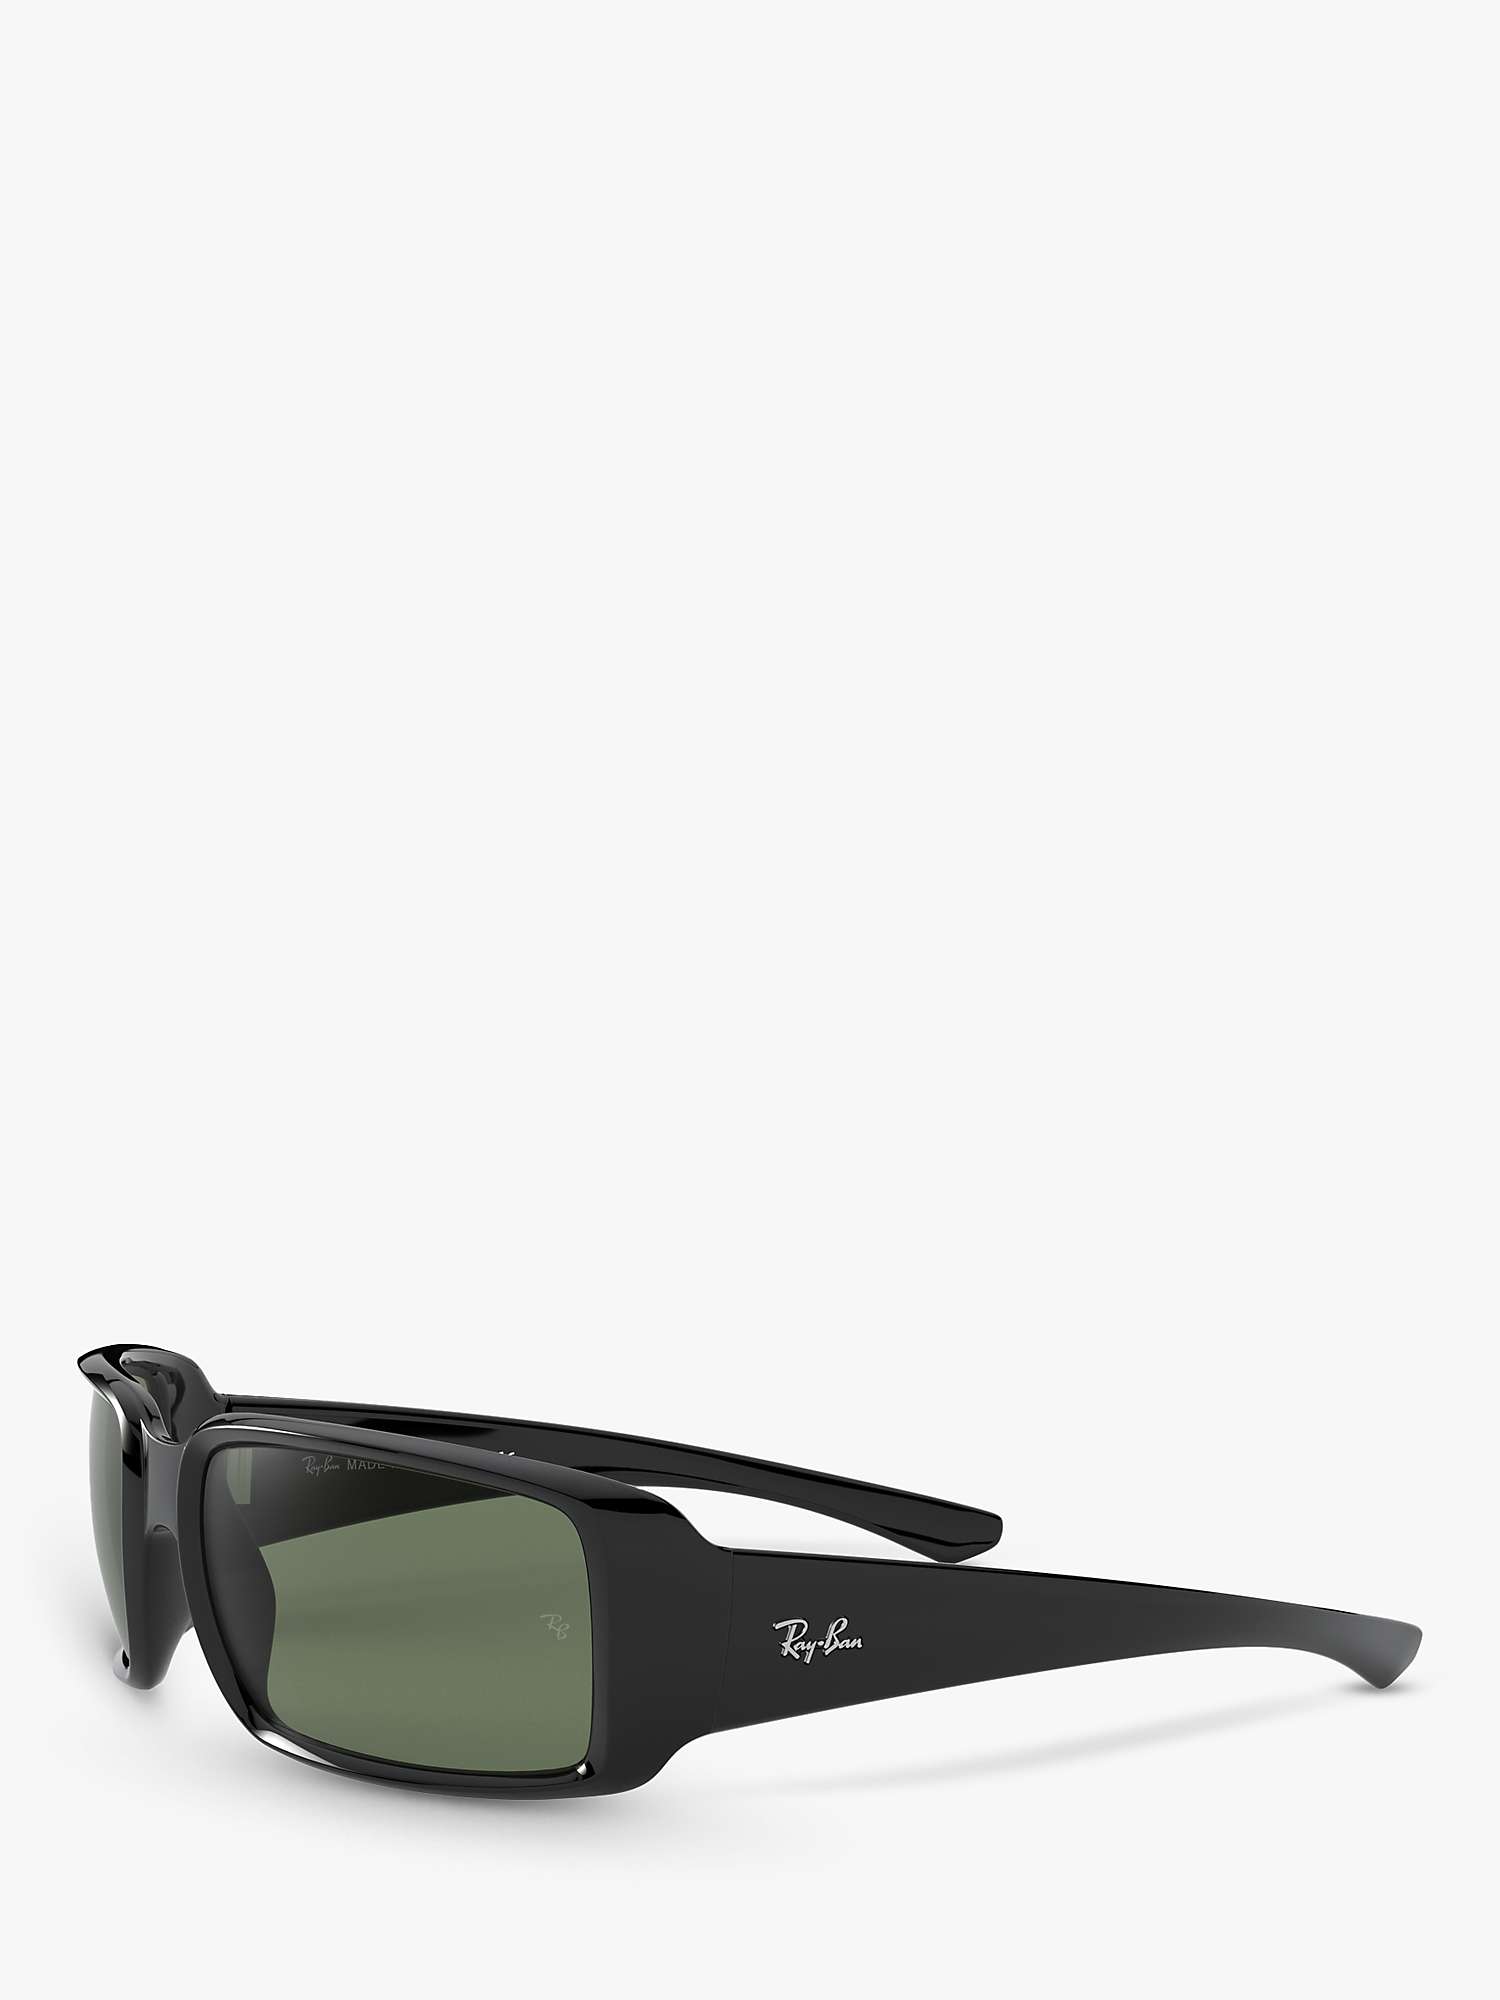 Buy Ray-Ban RB4338 Unisex Rectangular Frame Sunglasses, Black/Green Online at johnlewis.com